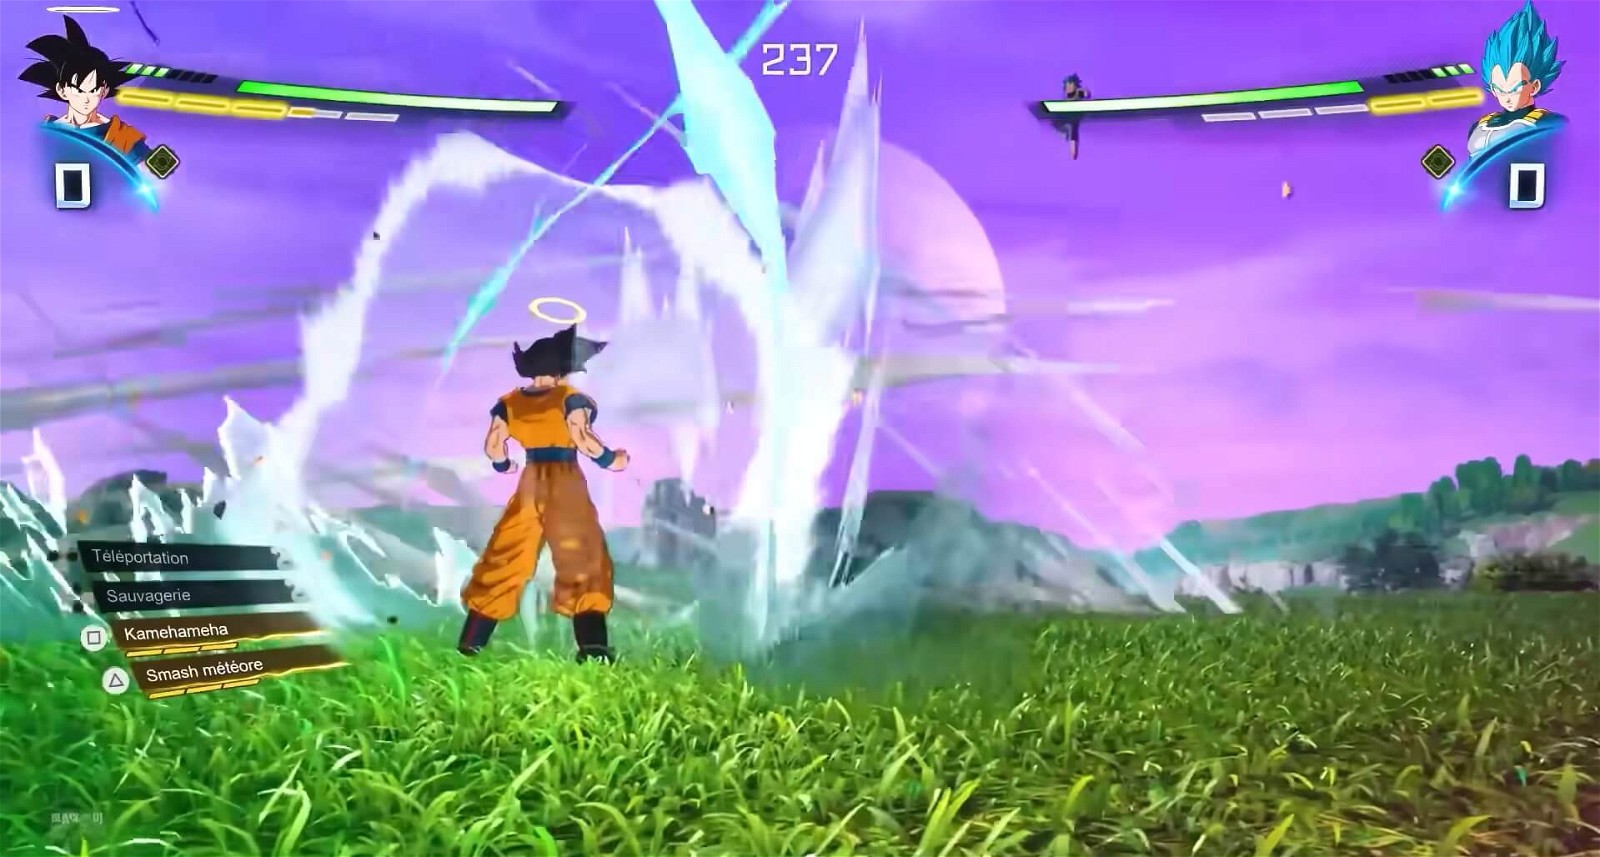 Goku charging his Ki on the ground in Dragon Ball: Sparking Zero. Credits: BLACK DJ on YouTube